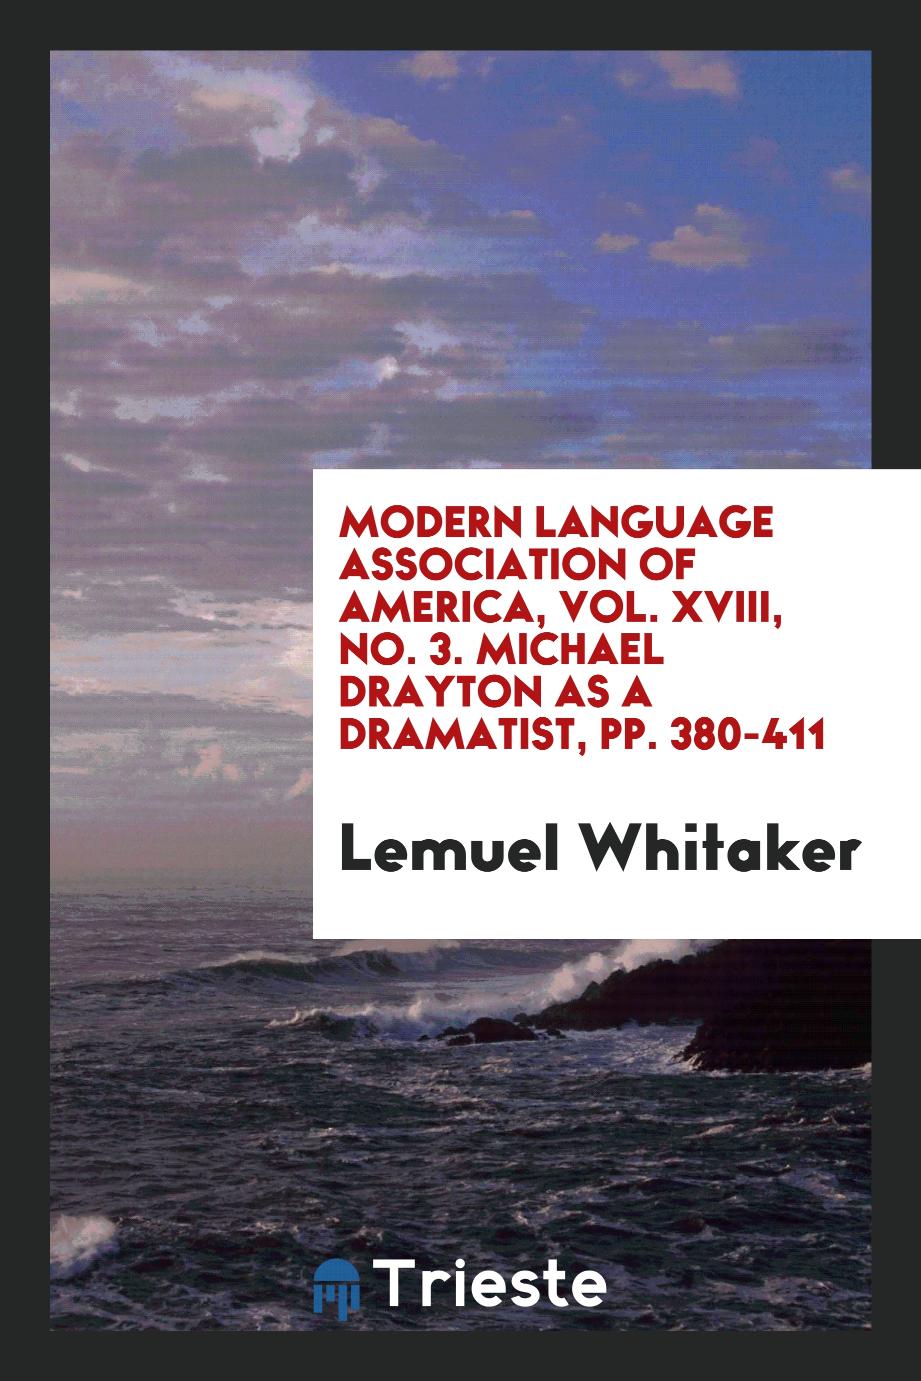 Modern Language Association of America, Vol. XVIII, No. 3. Michael Drayton as a Dramatist, pp. 380-411